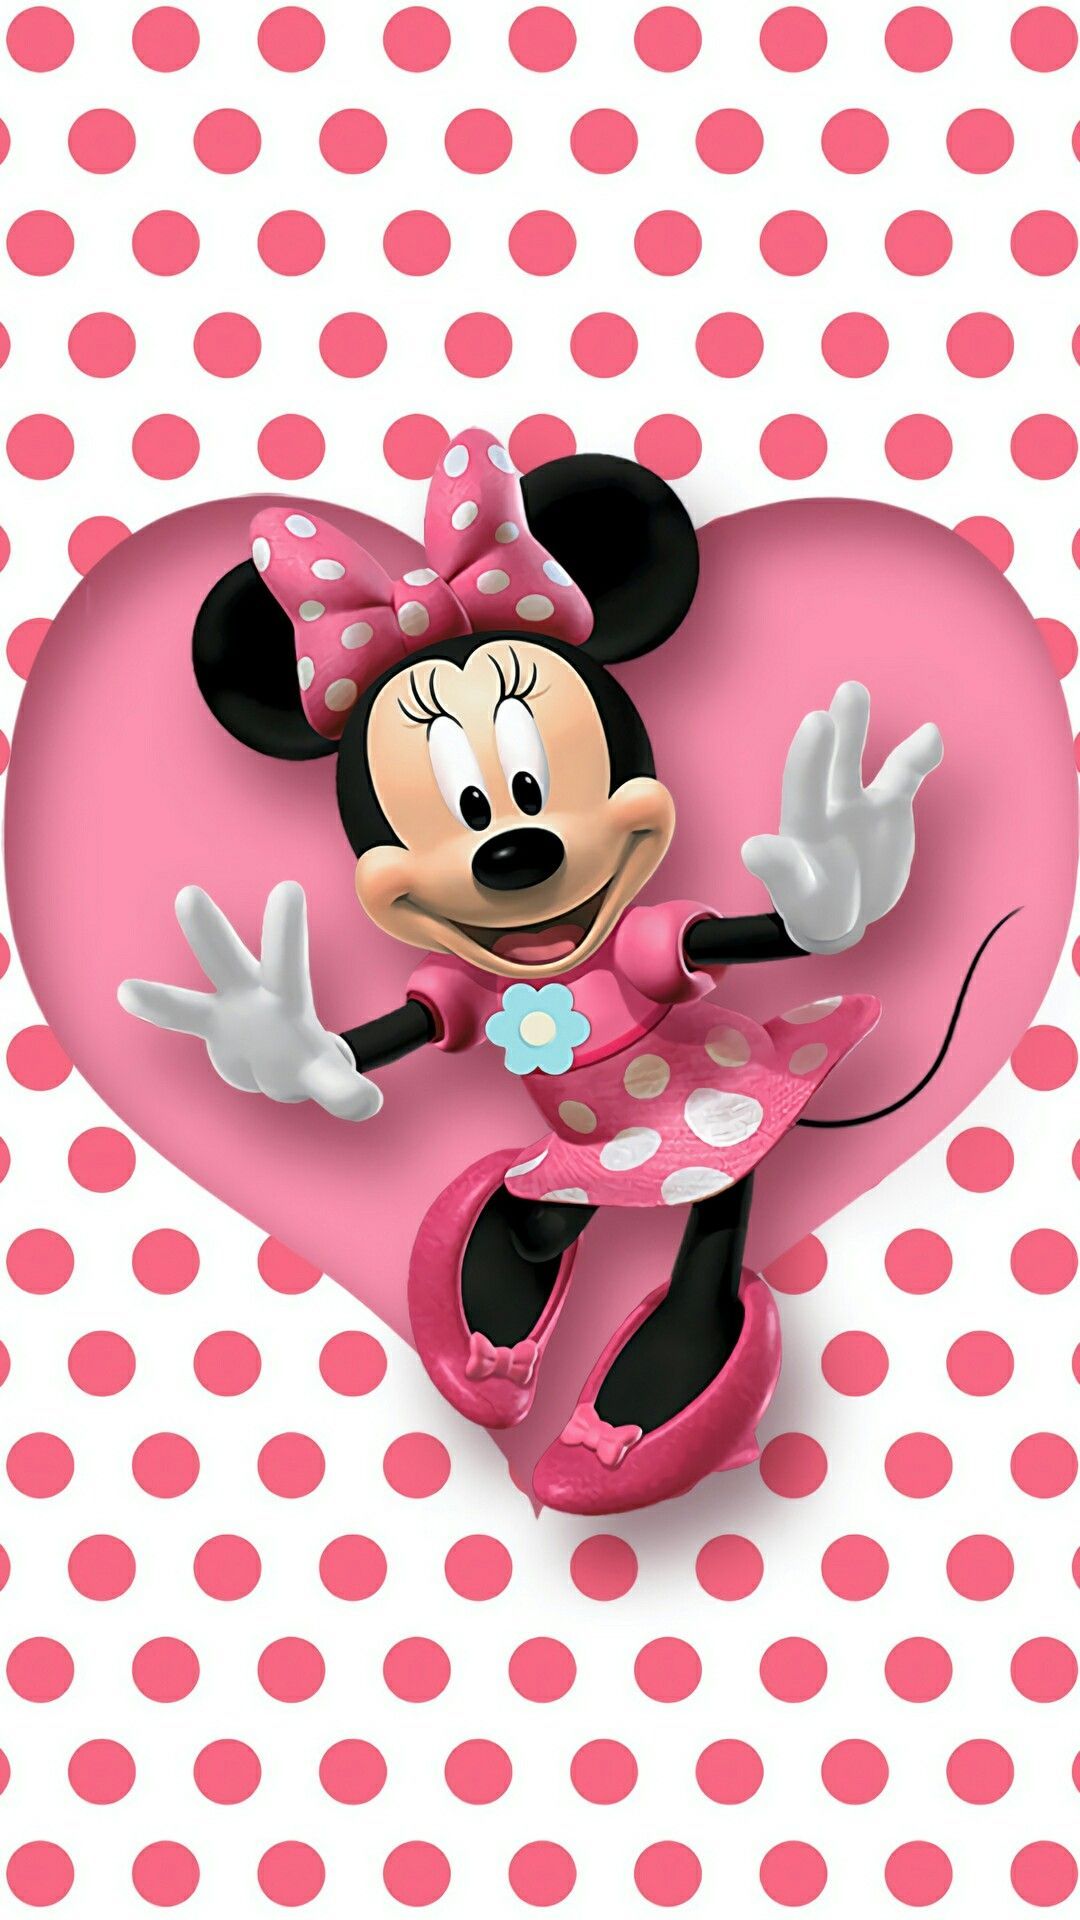 Polka Dot Minnie Mouse Image. Minnie mouse image, Minnie mouse picture, Minnie mouse cartoons